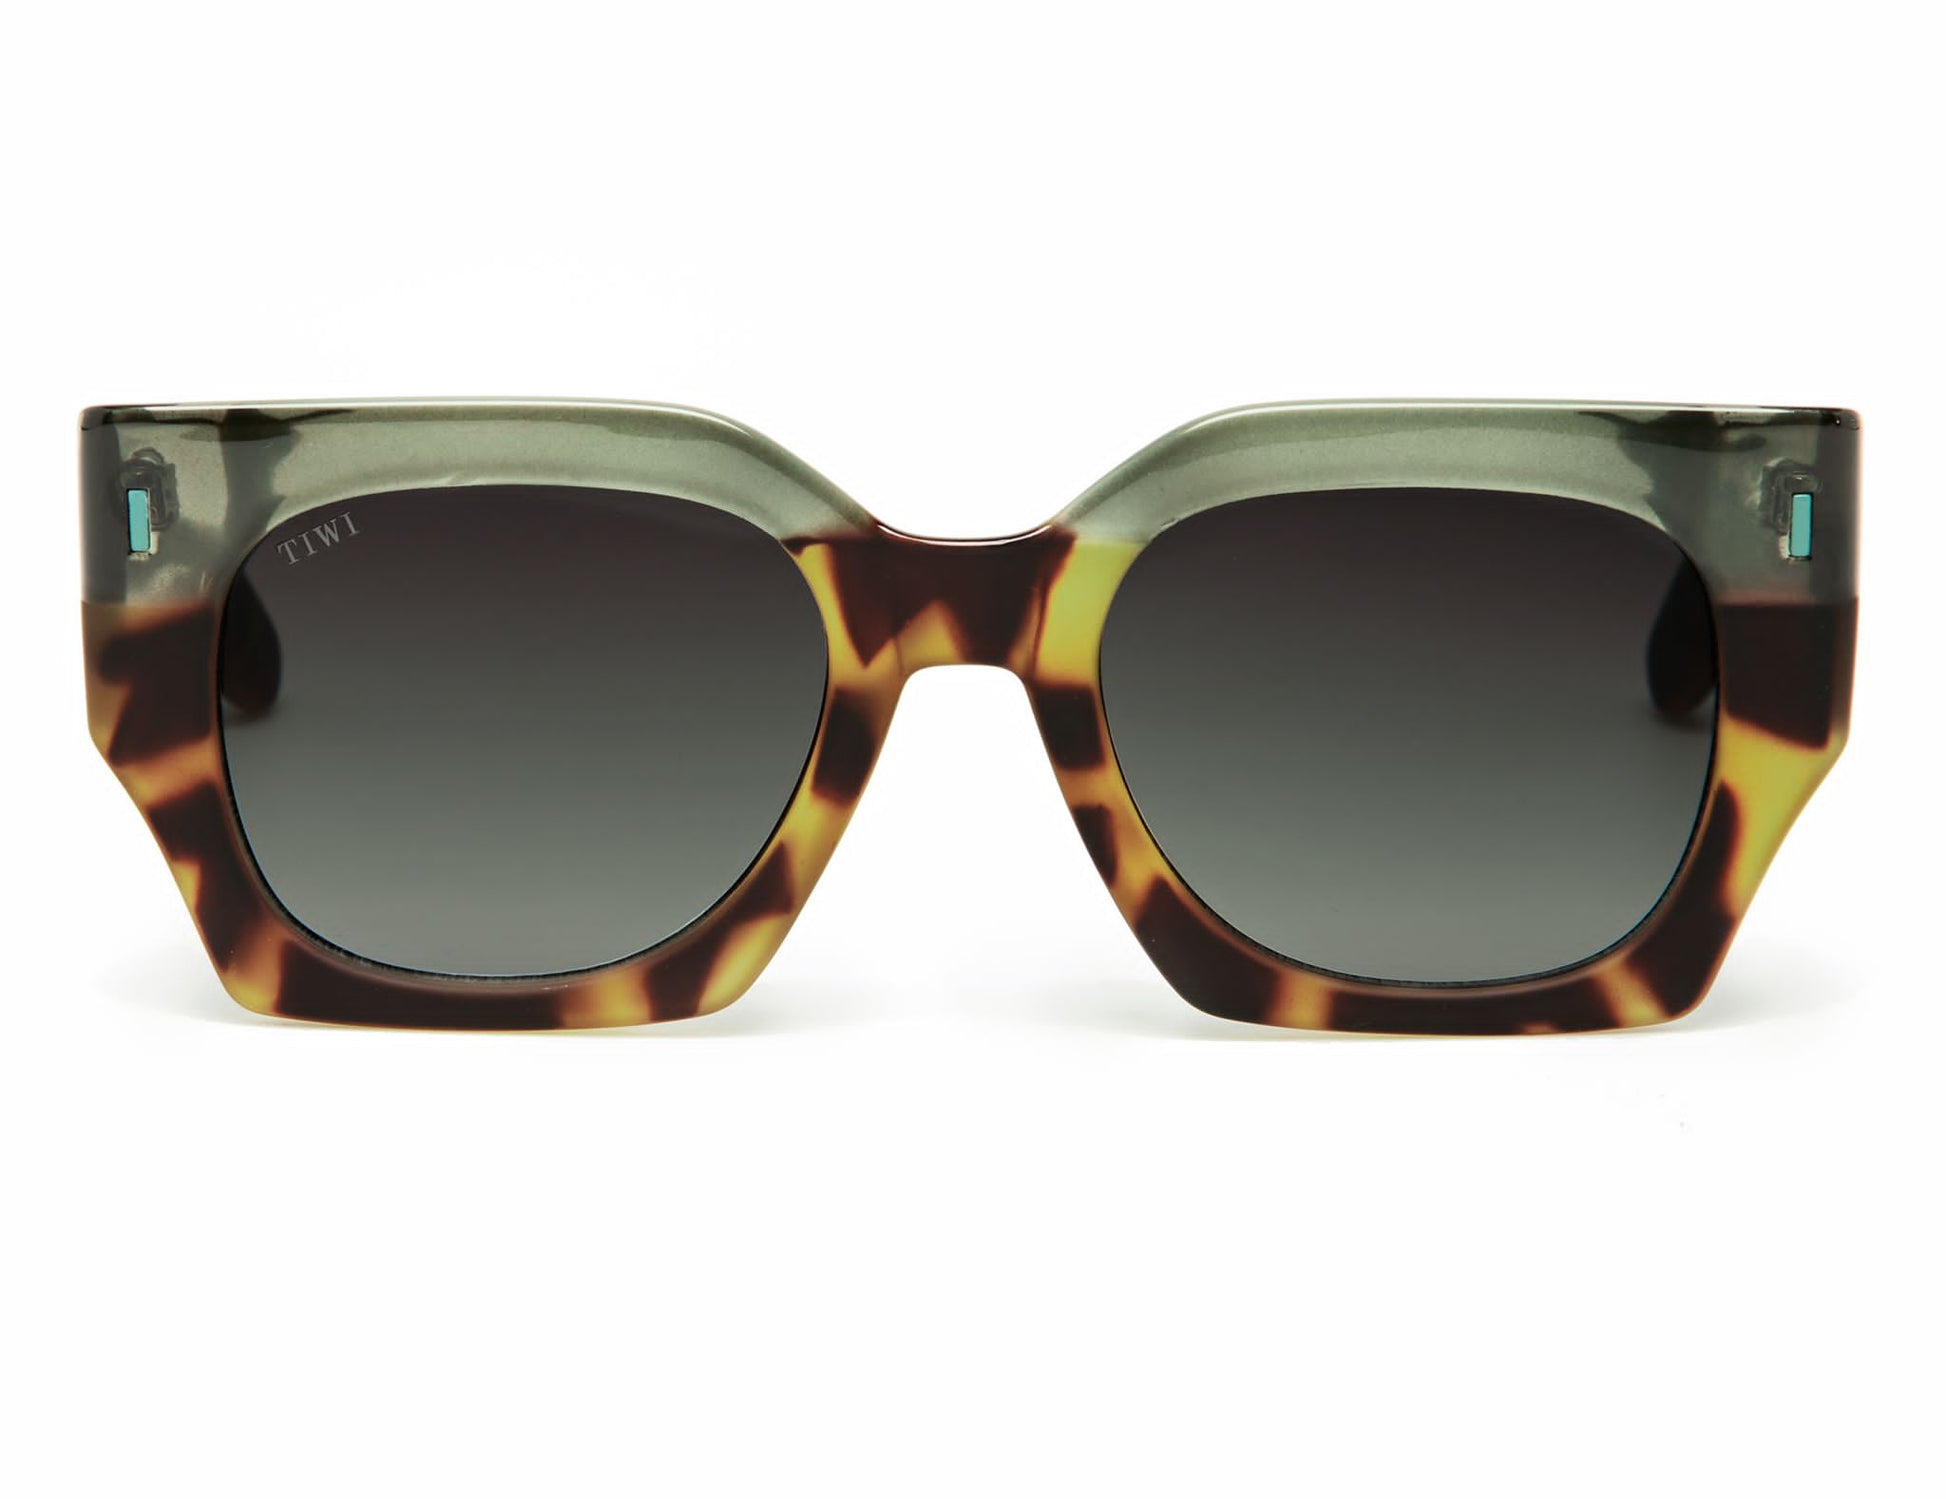 MATT Sunglasses Available in more colors Green Tortoise/Shiny Green  